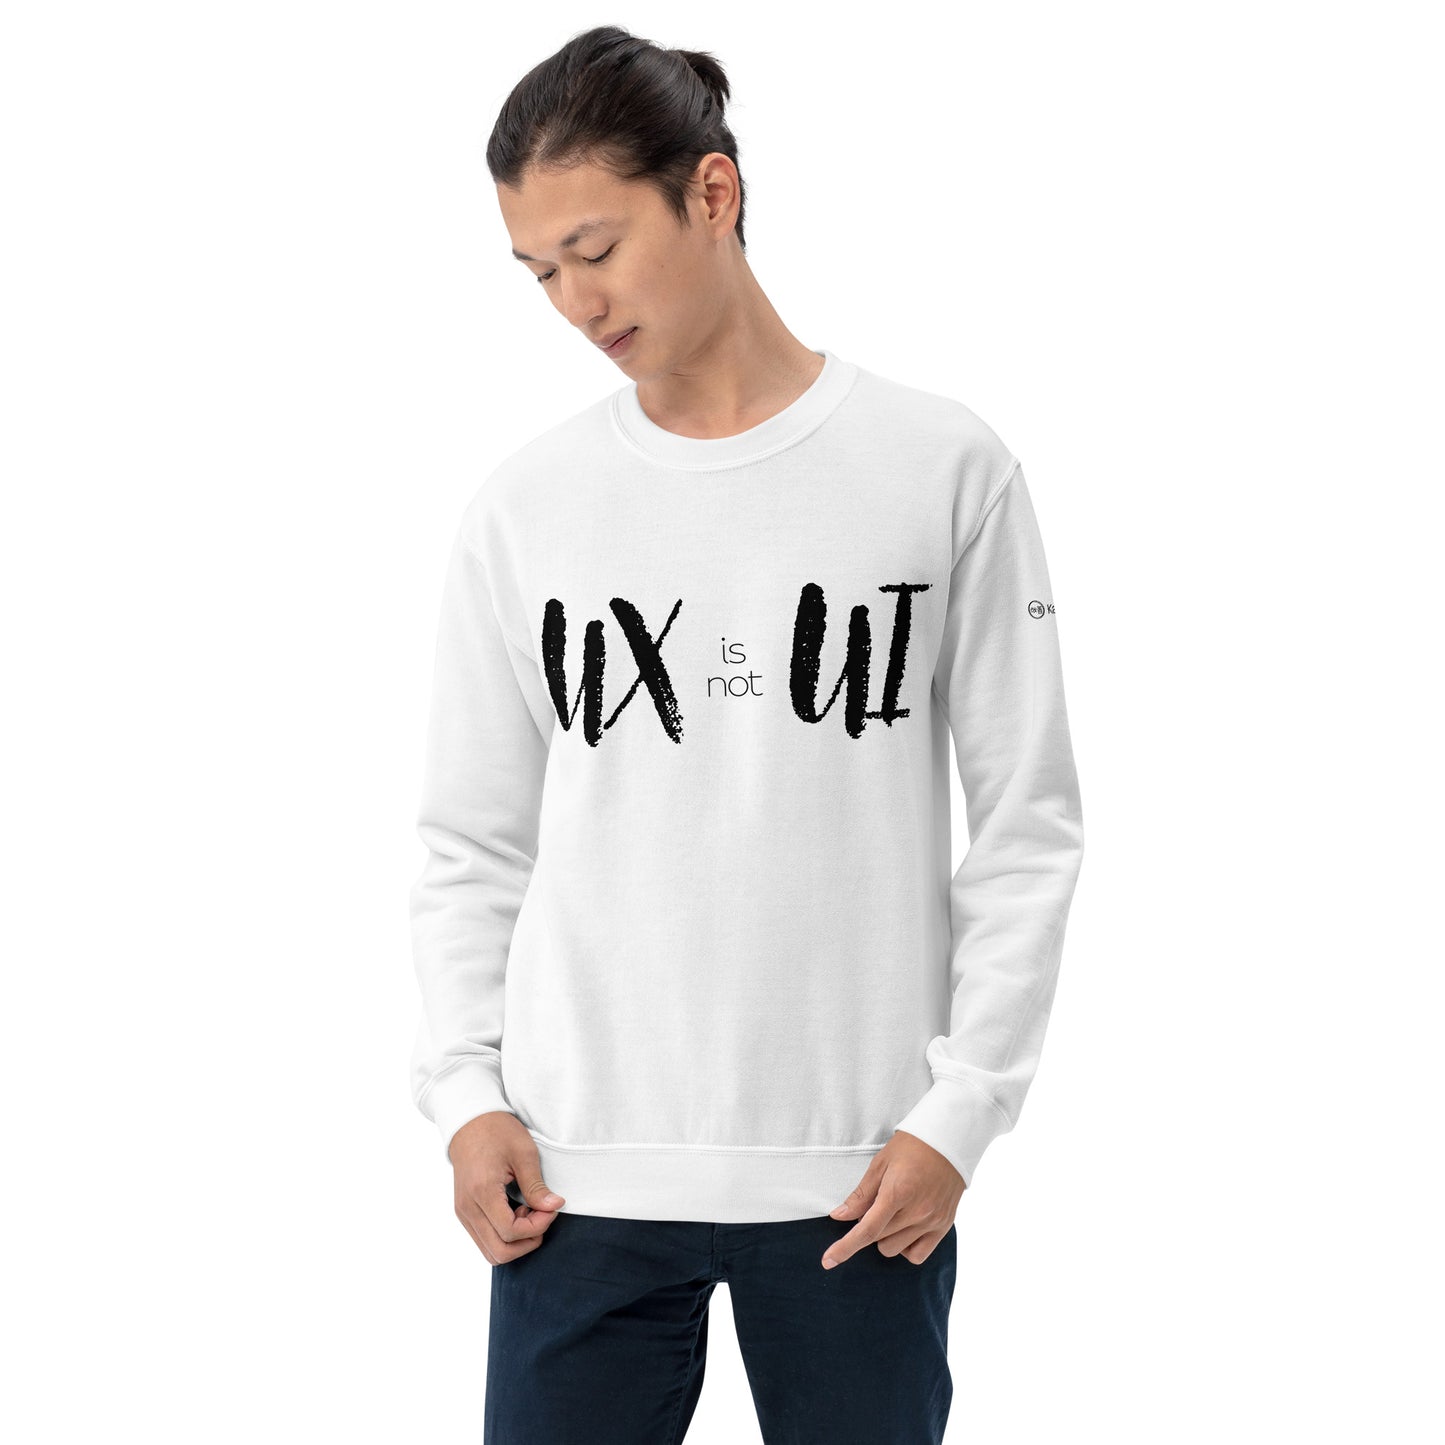 UX is not UI Unisex Sweatshirt #1